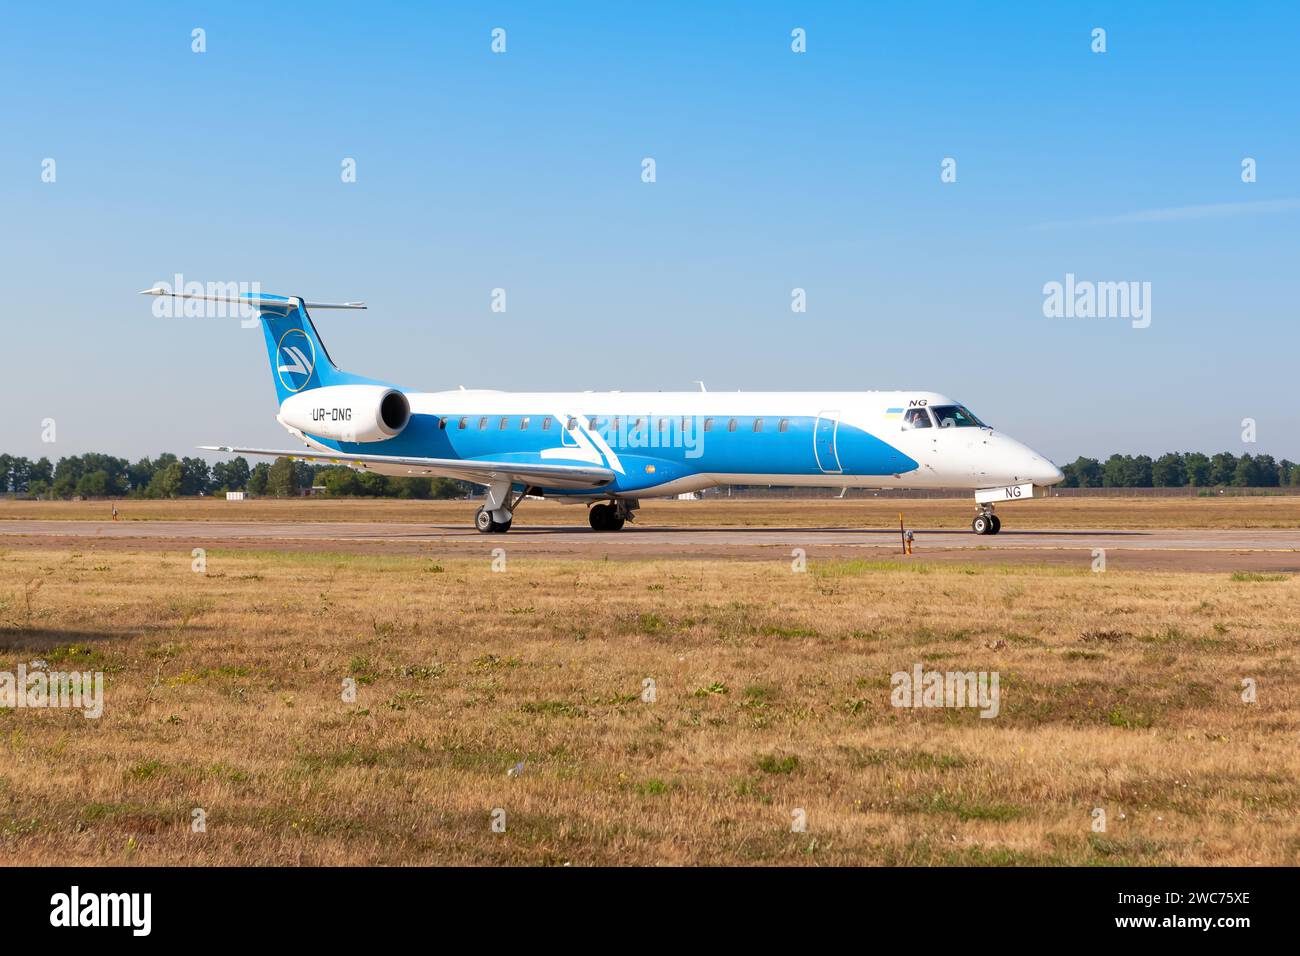 Boryspil, Ukraine - 10. September 2019: Flugzeug Embraer ERJ-145 (UR-DNG) von Windrose Airlines auf dem Boryspil International Airport Stockfoto